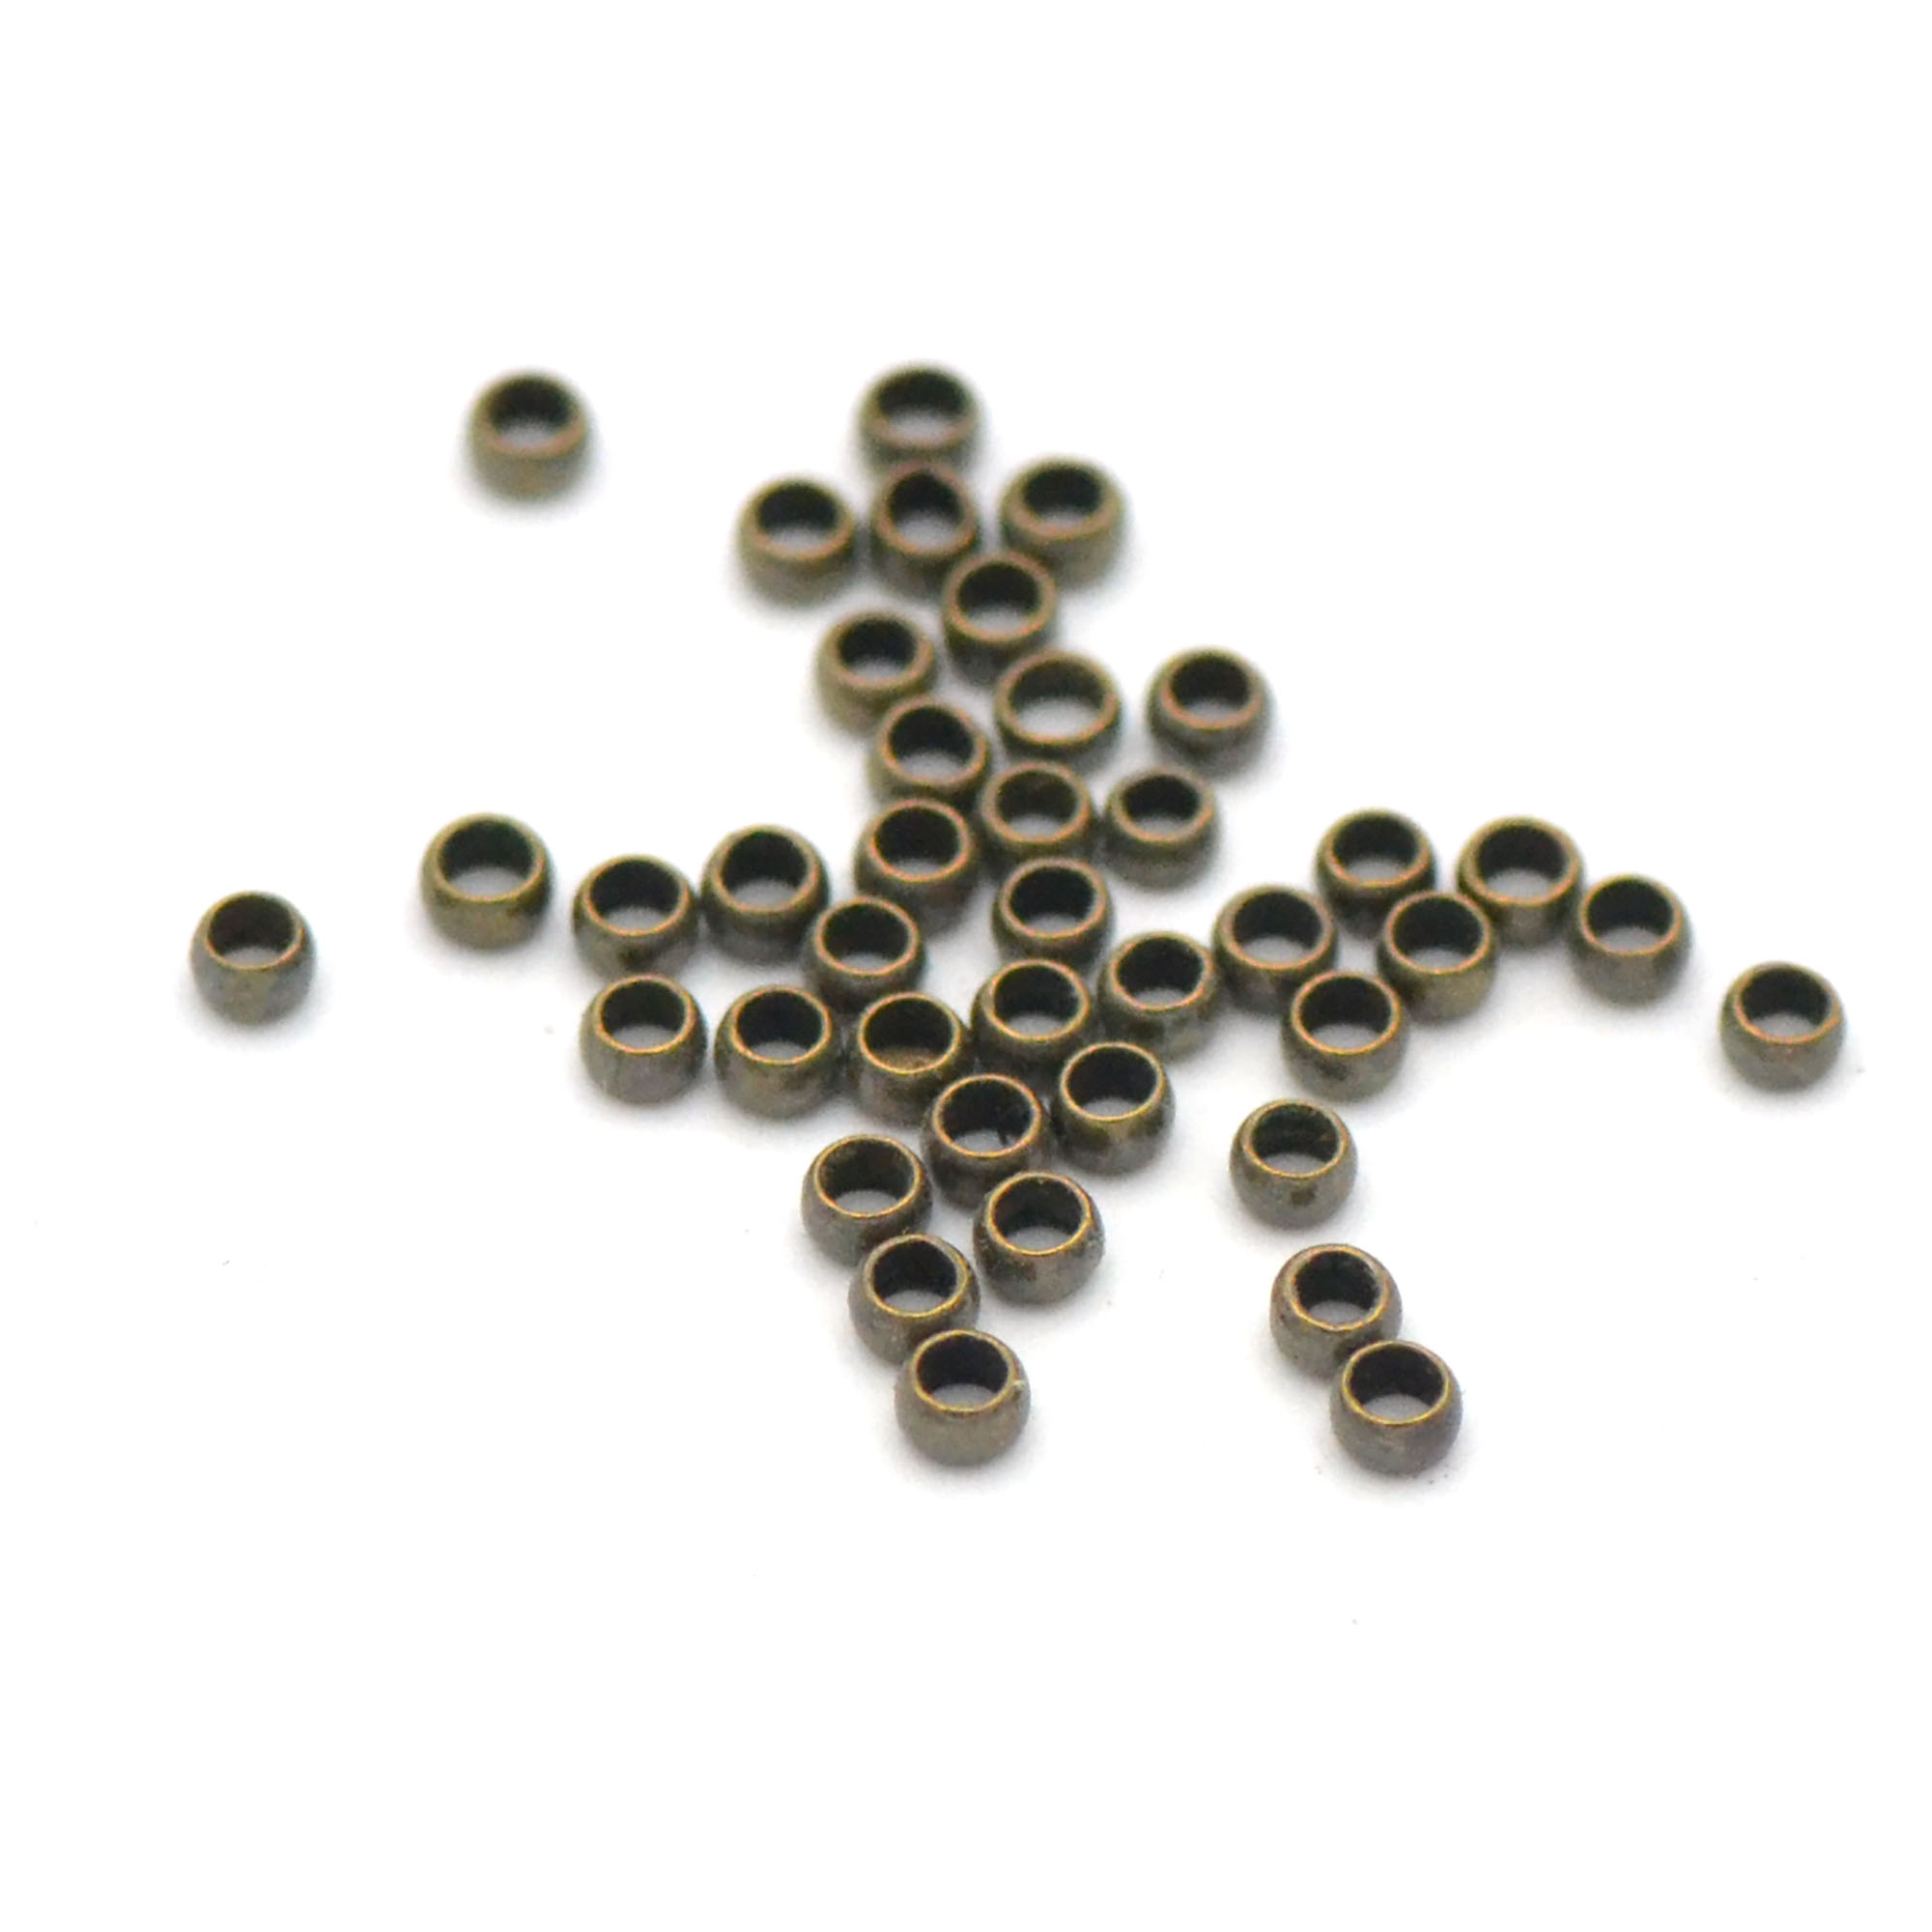 5g environ 146 perles à écraser 3 mm, bronze